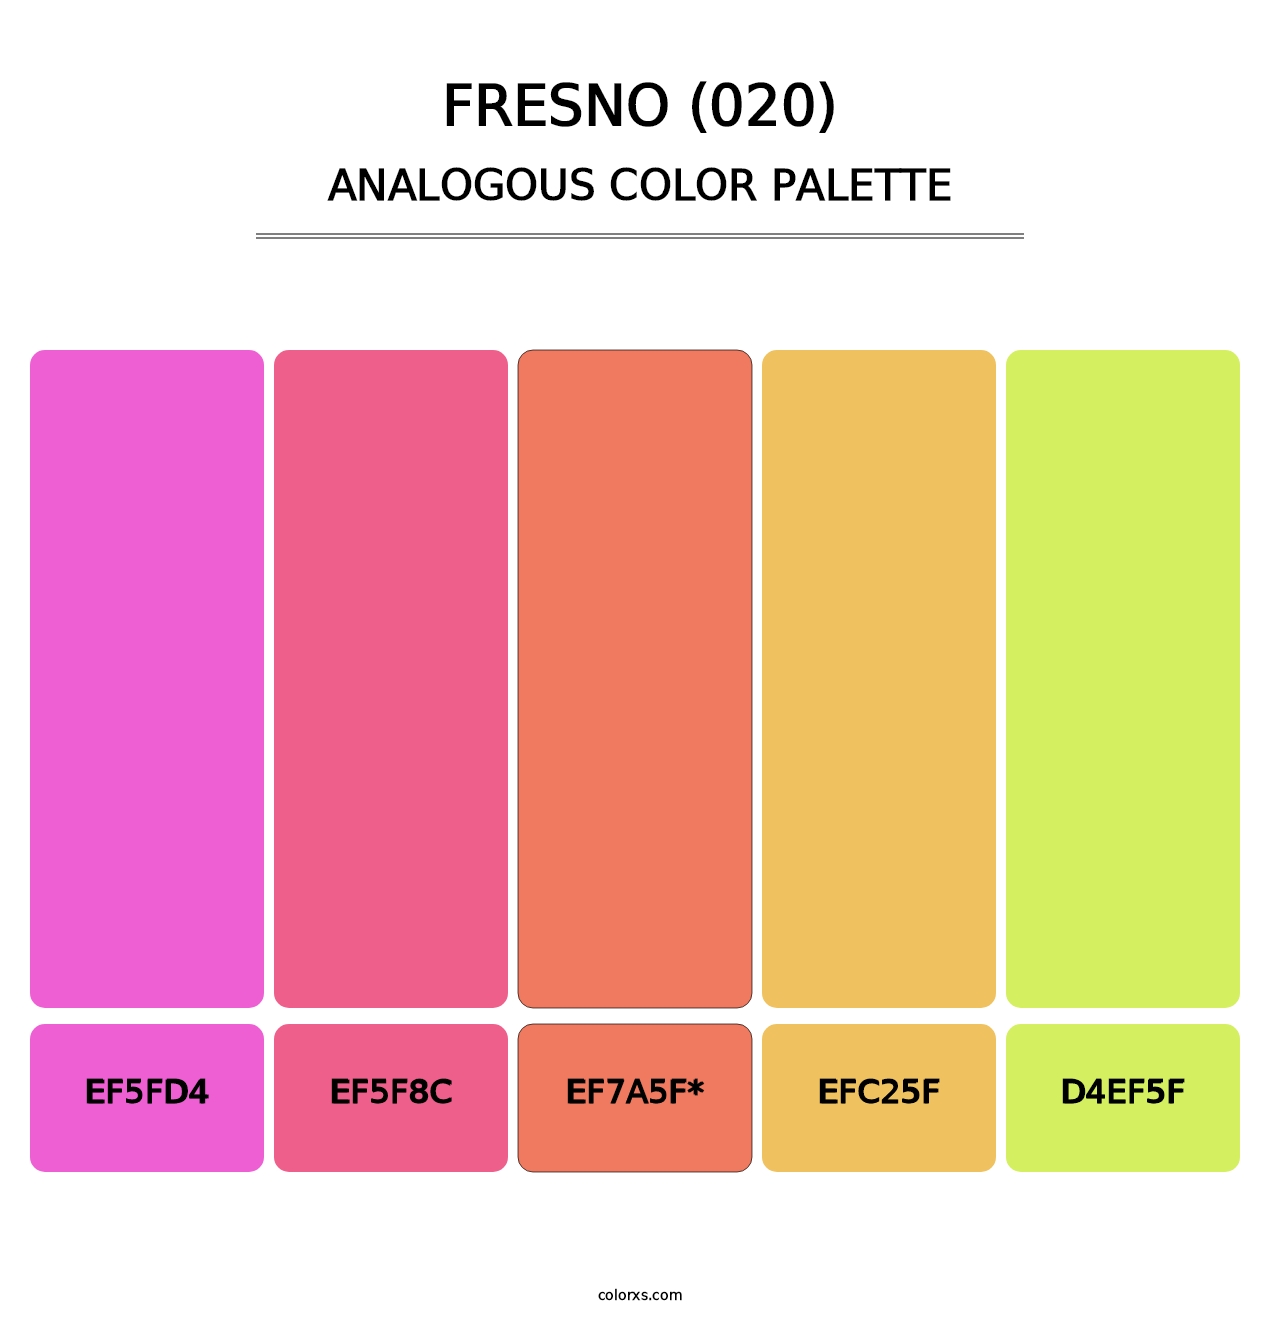 Fresno (020) - Analogous Color Palette